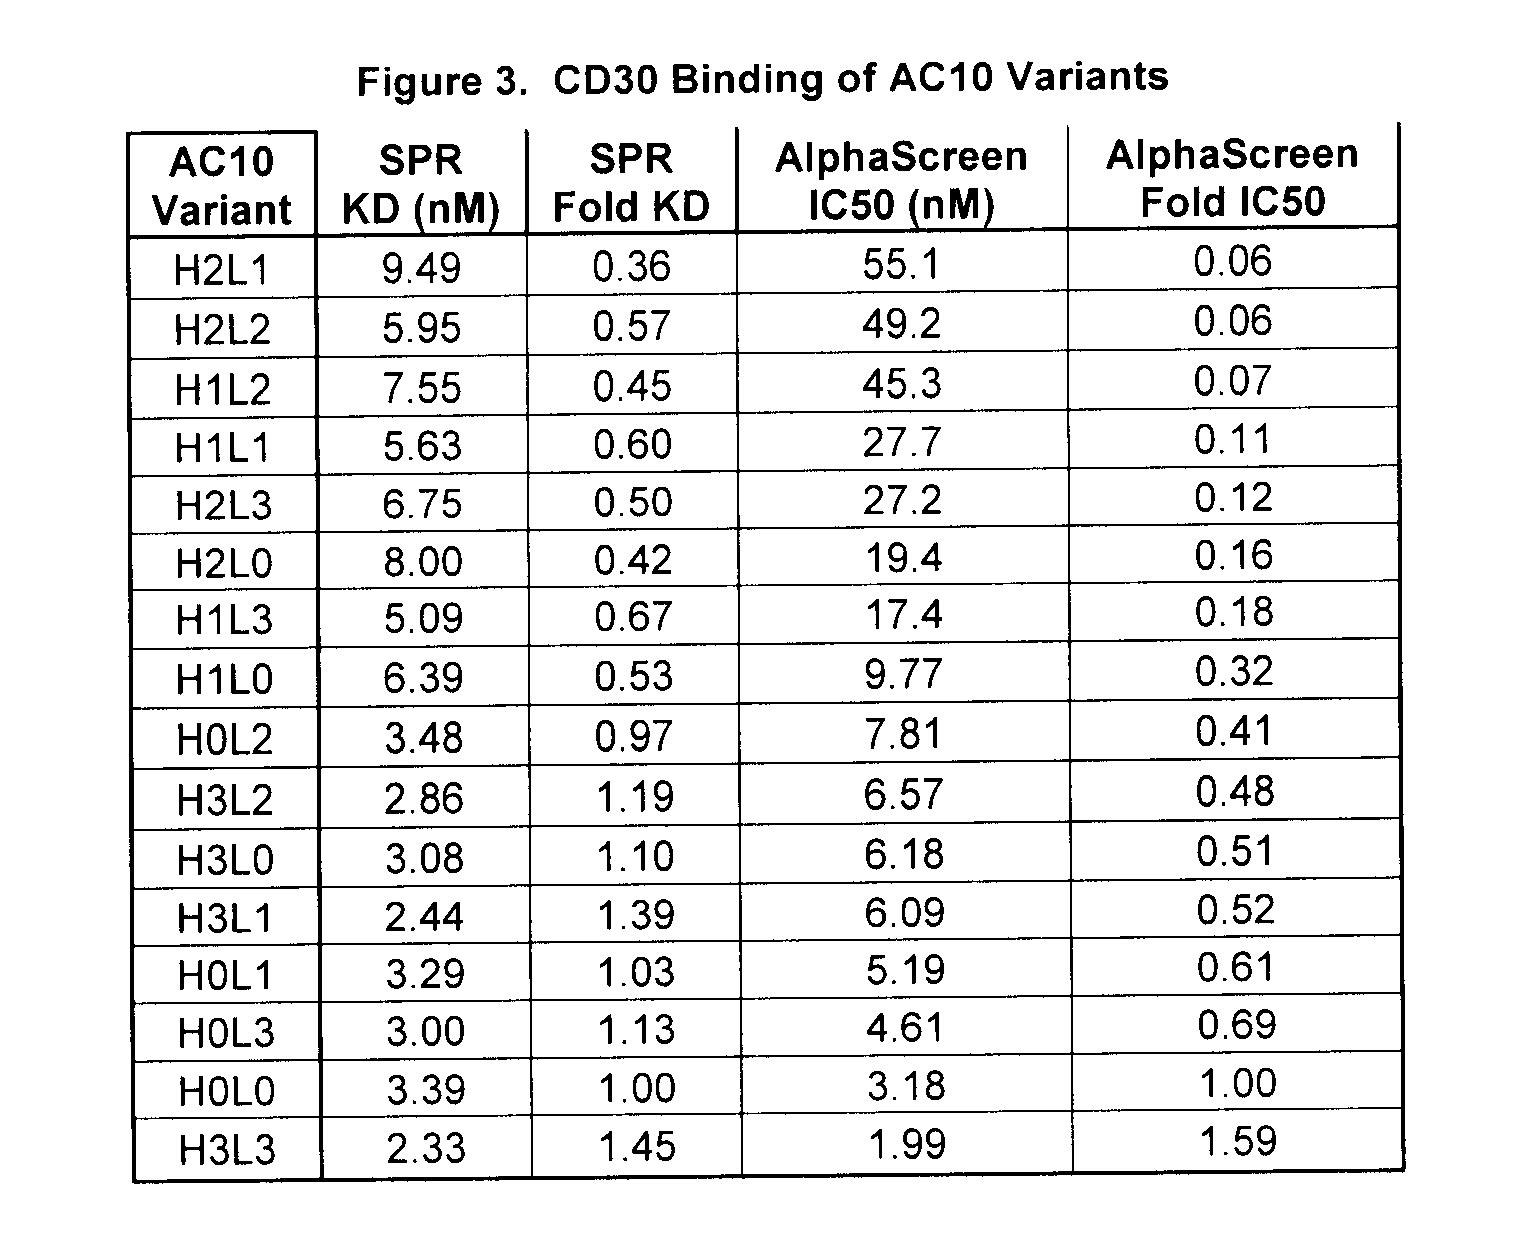 Optimized Anti-CD30 antibodies